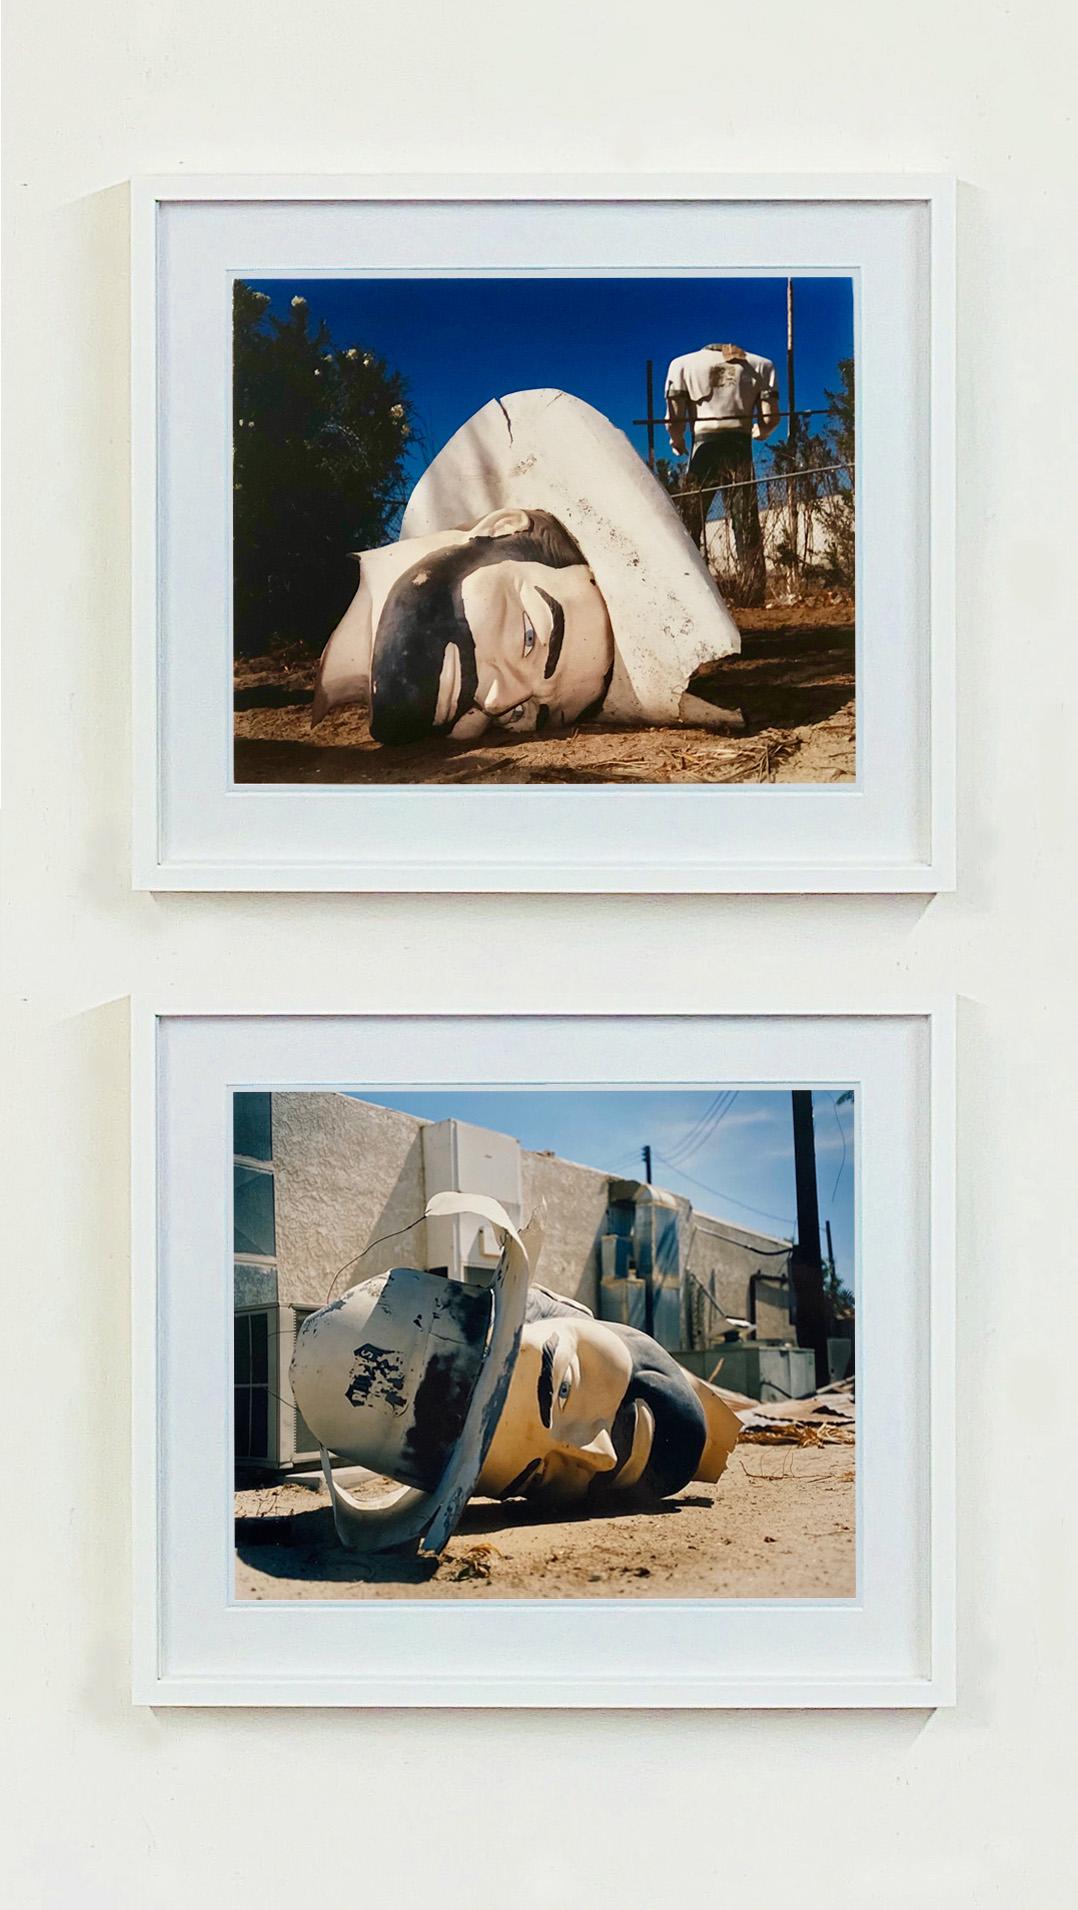 Poor Richard Head, Salton Sea, Kalifornien – Roadside America, Farbfoto (Grau), Figurative Photograph, von Richard Heeps